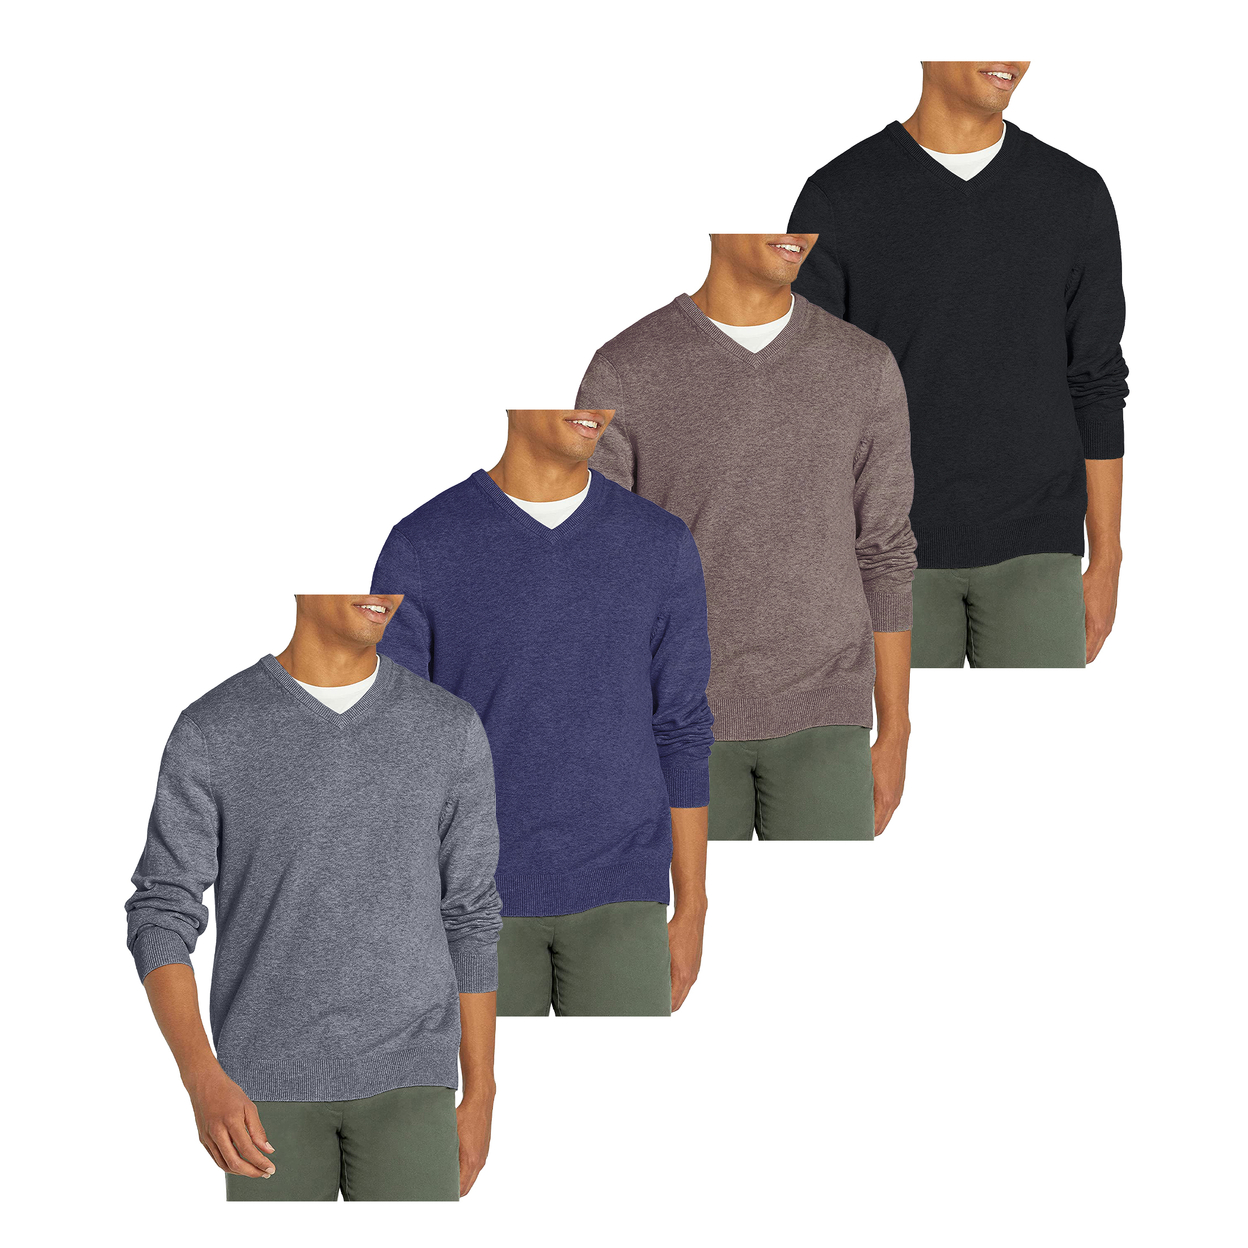 3-Pack: Men's Casual Ultra Soft Slim Fit Warm Knit V-Neck Sweater - Large